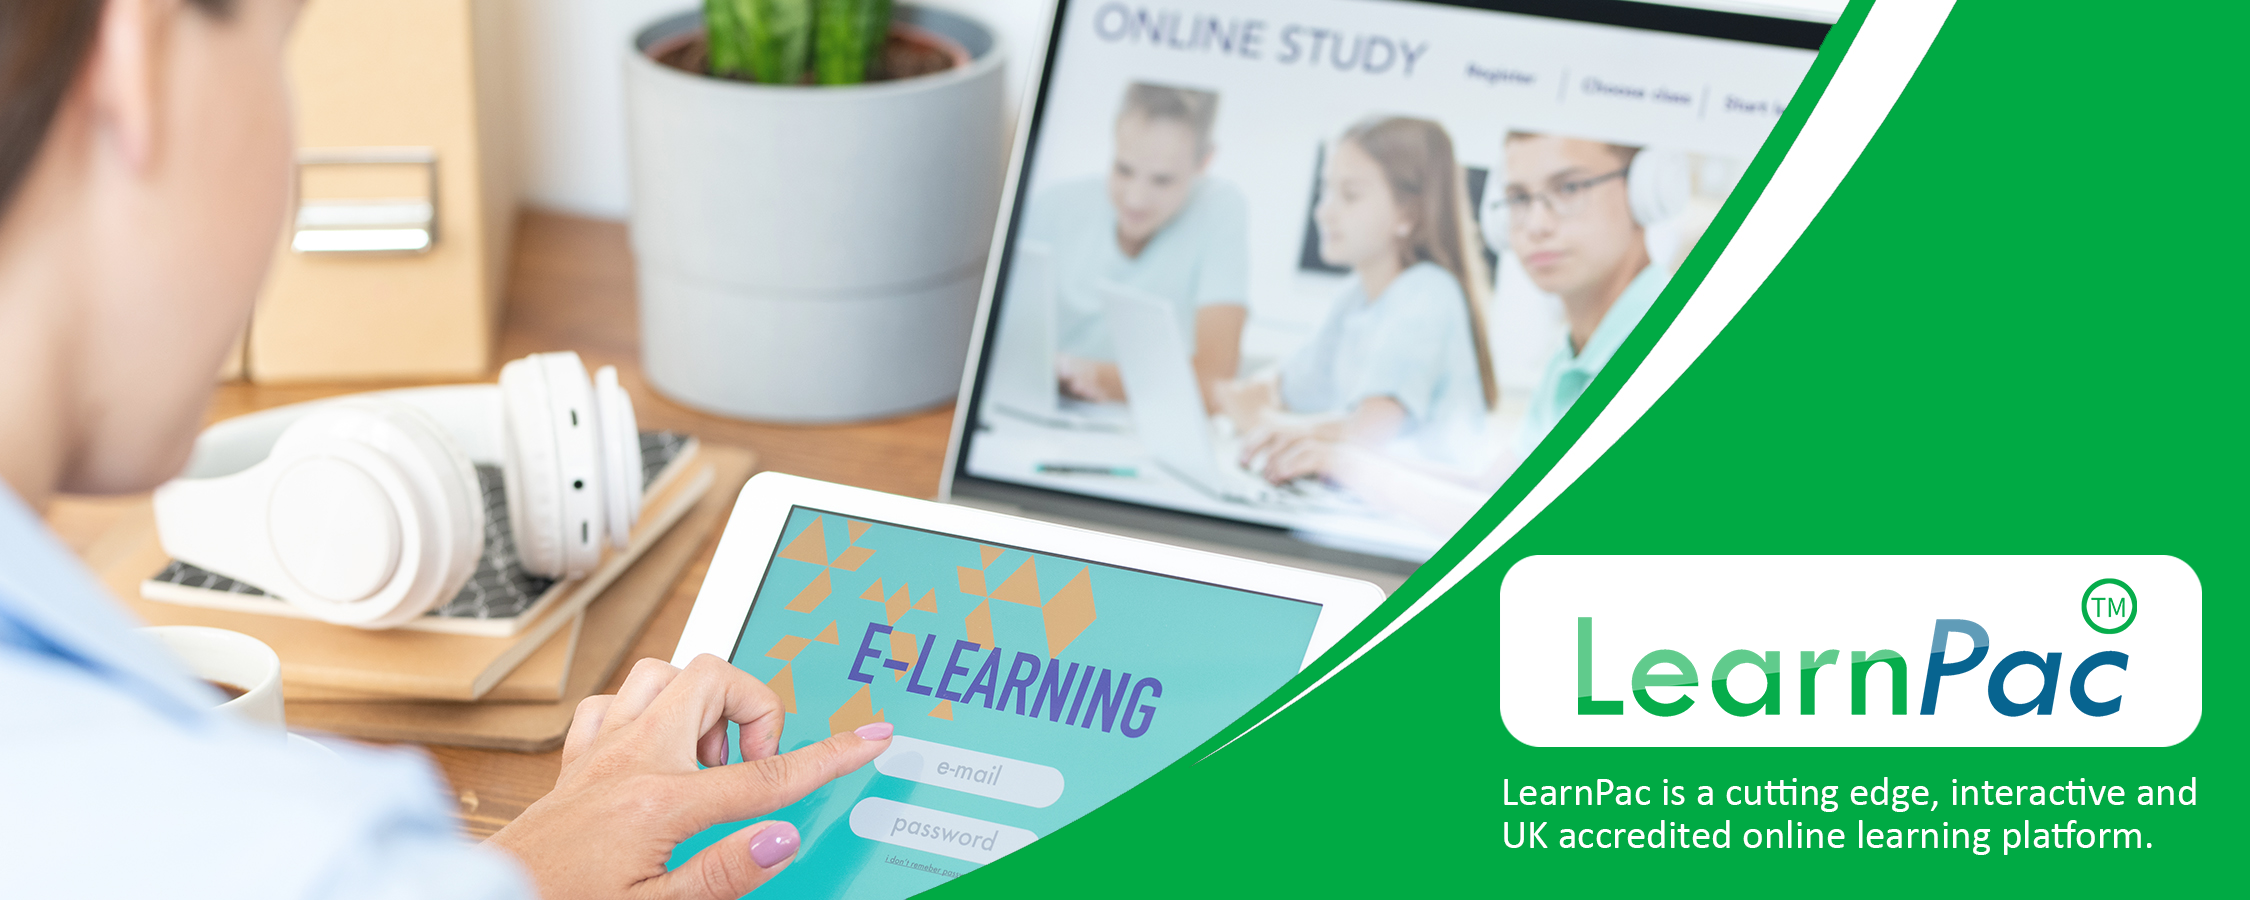 Sepsis Management Training - Online Learning Courses - E-Learning Courses - LearnPac Systems UK -